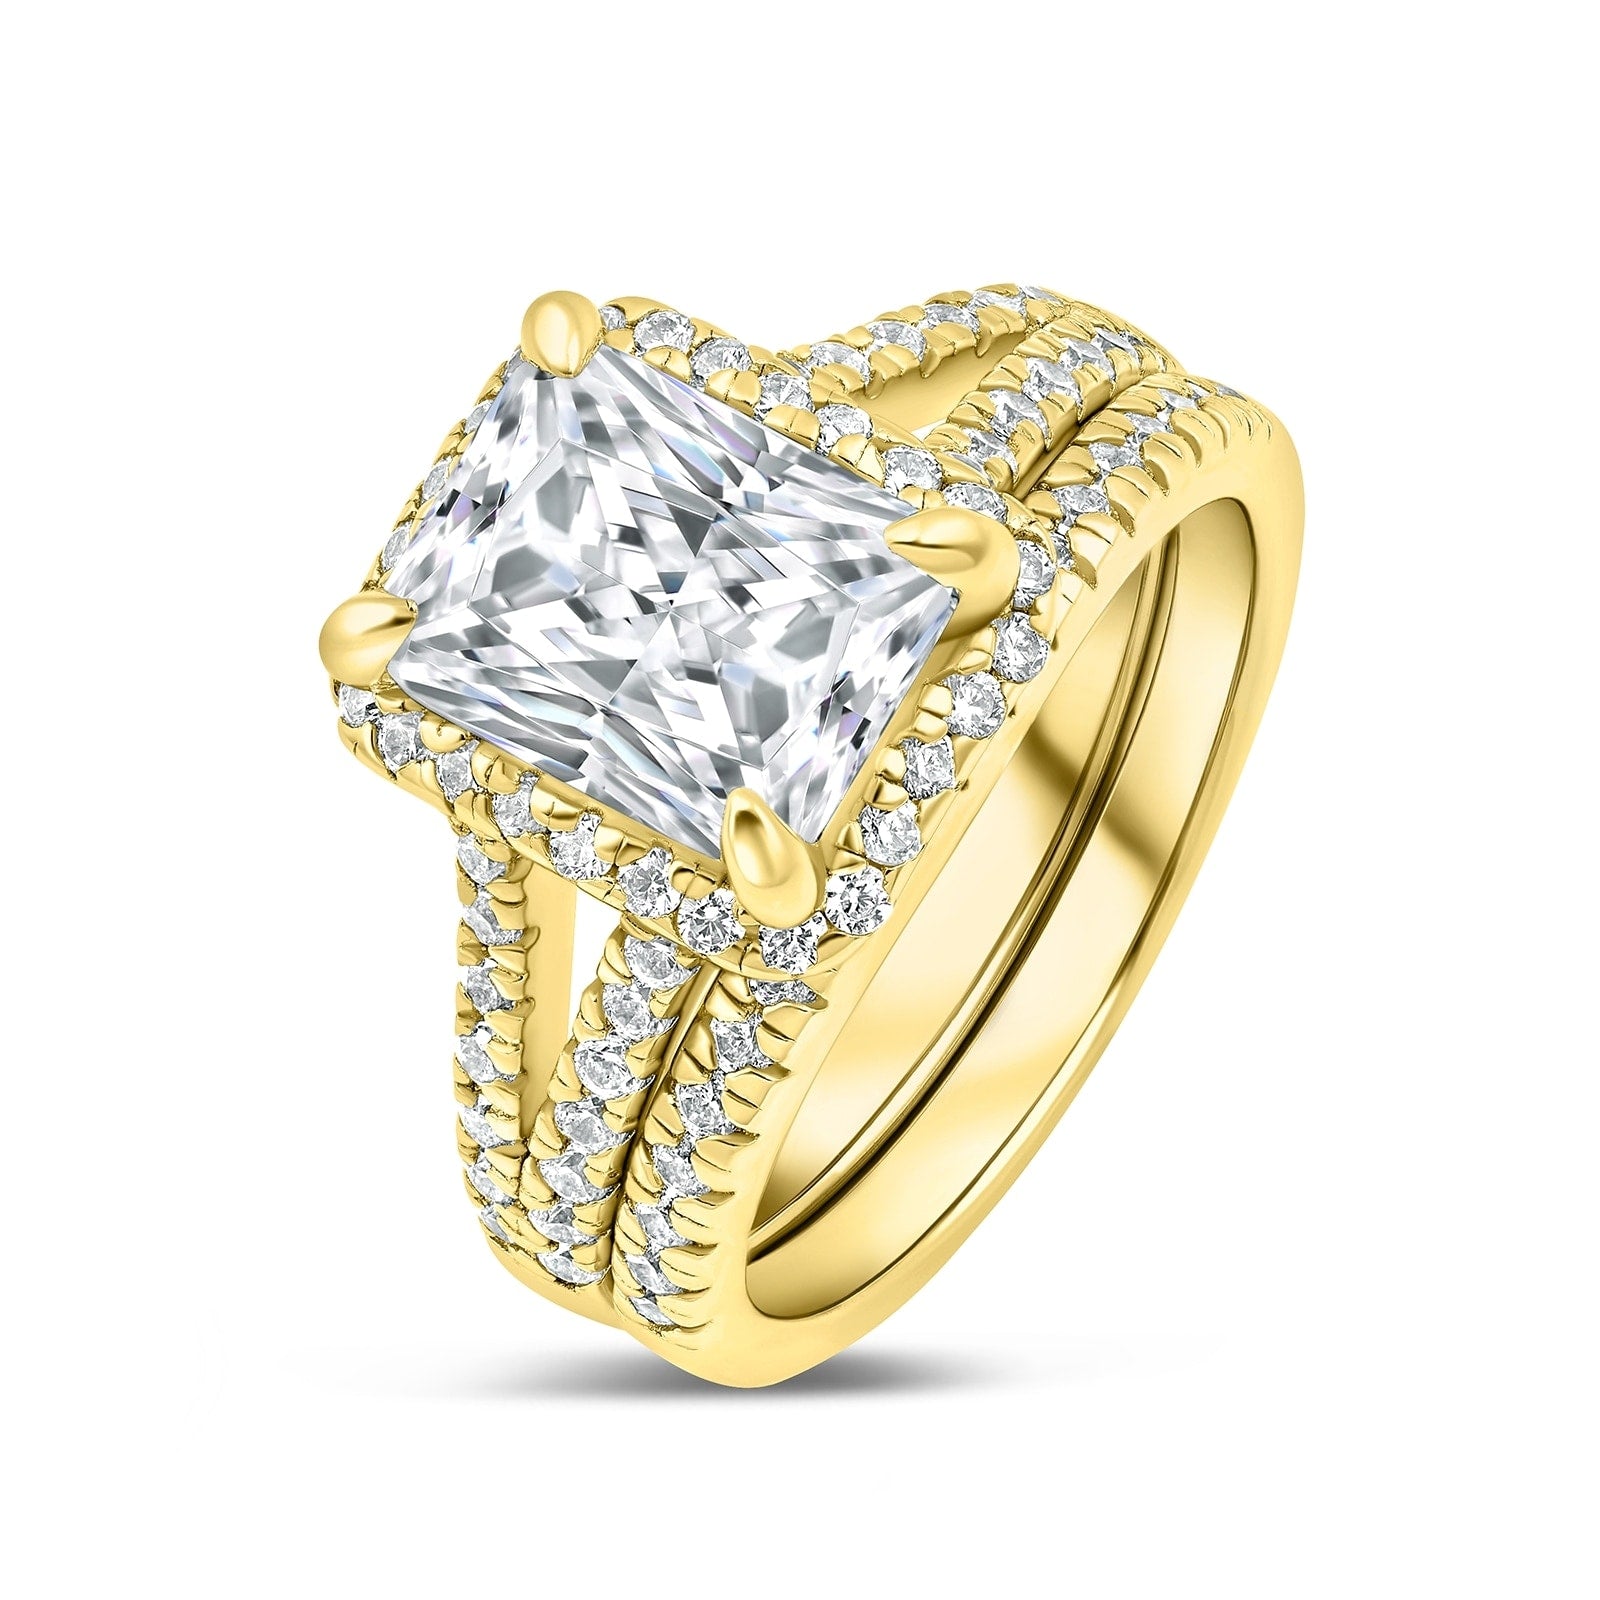 3.5 carat radiant cut gold wedding ring set